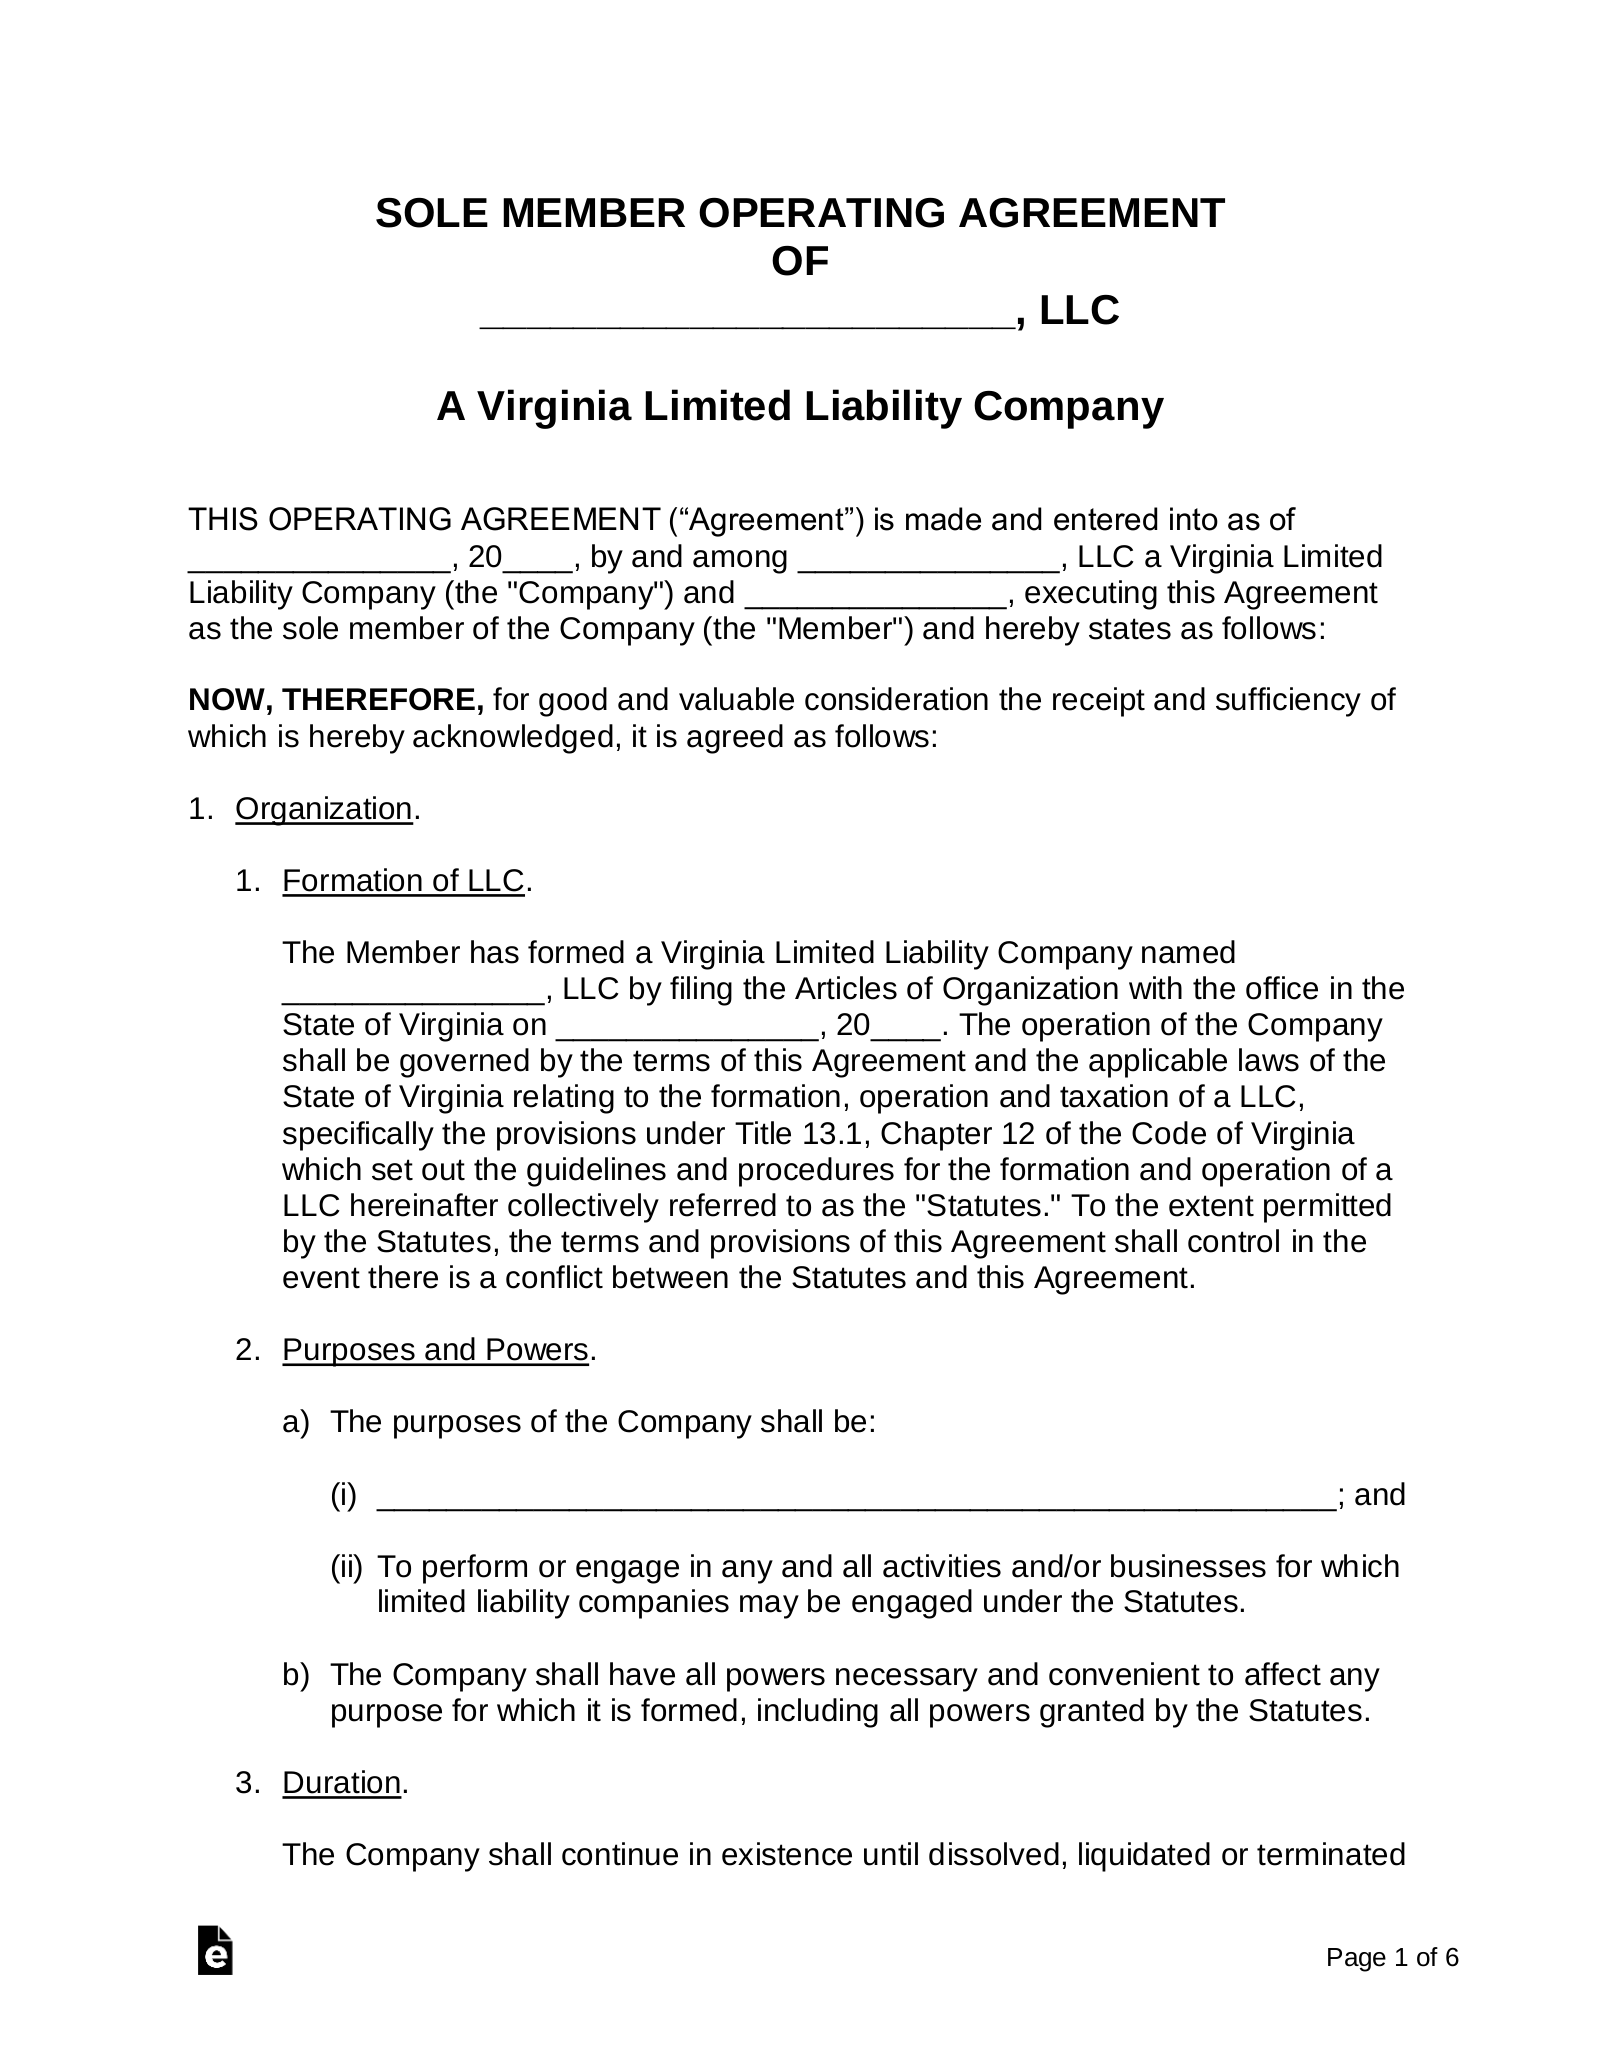 free-virginia-single-member-llc-operating-agreement-form-pdf-word-eforms